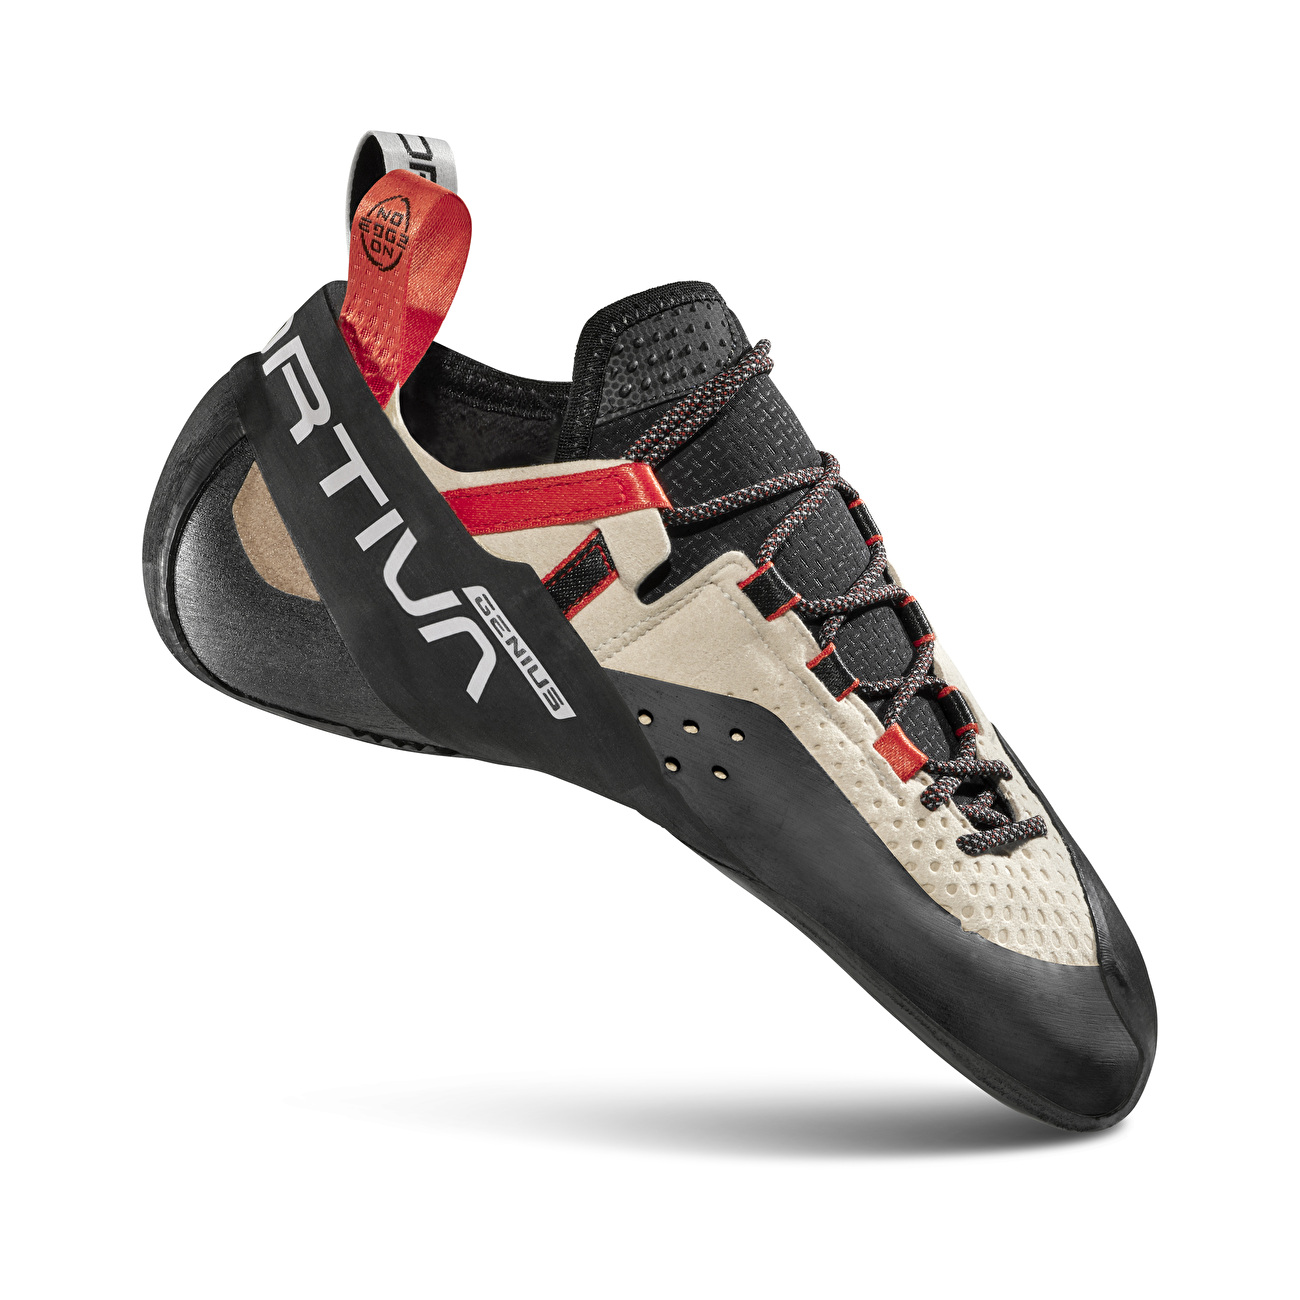 La Sportiva Genius - climbing shoes - Expo Planetmountain.com, outdoor ...